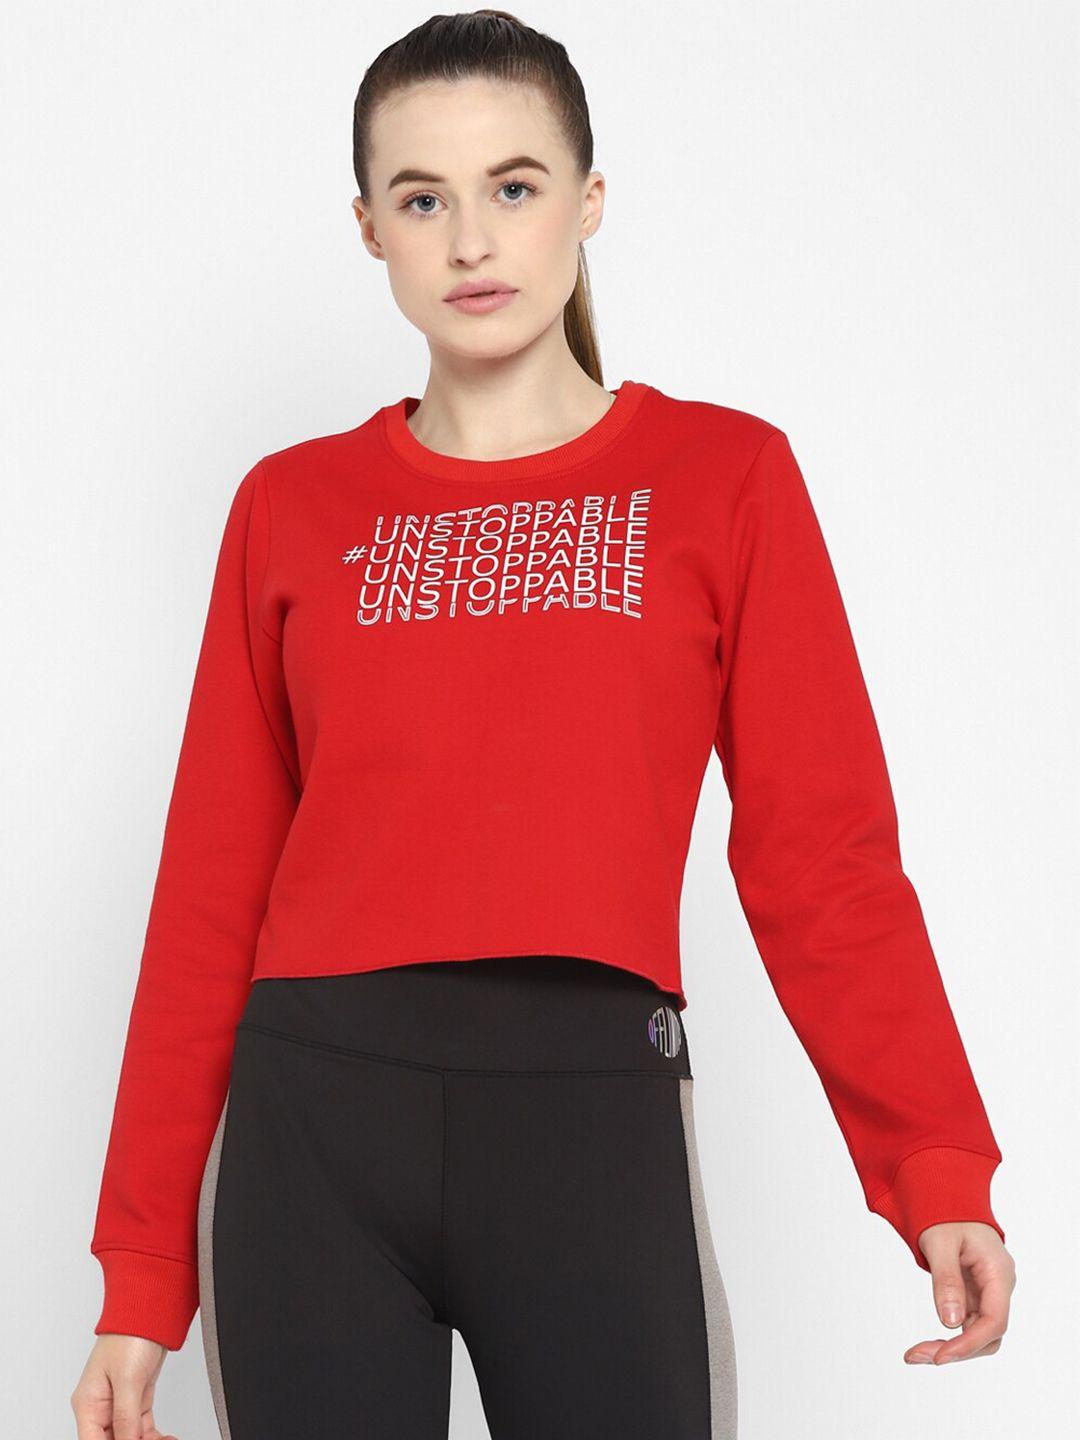 off limits women red printed cotton sweatshirt